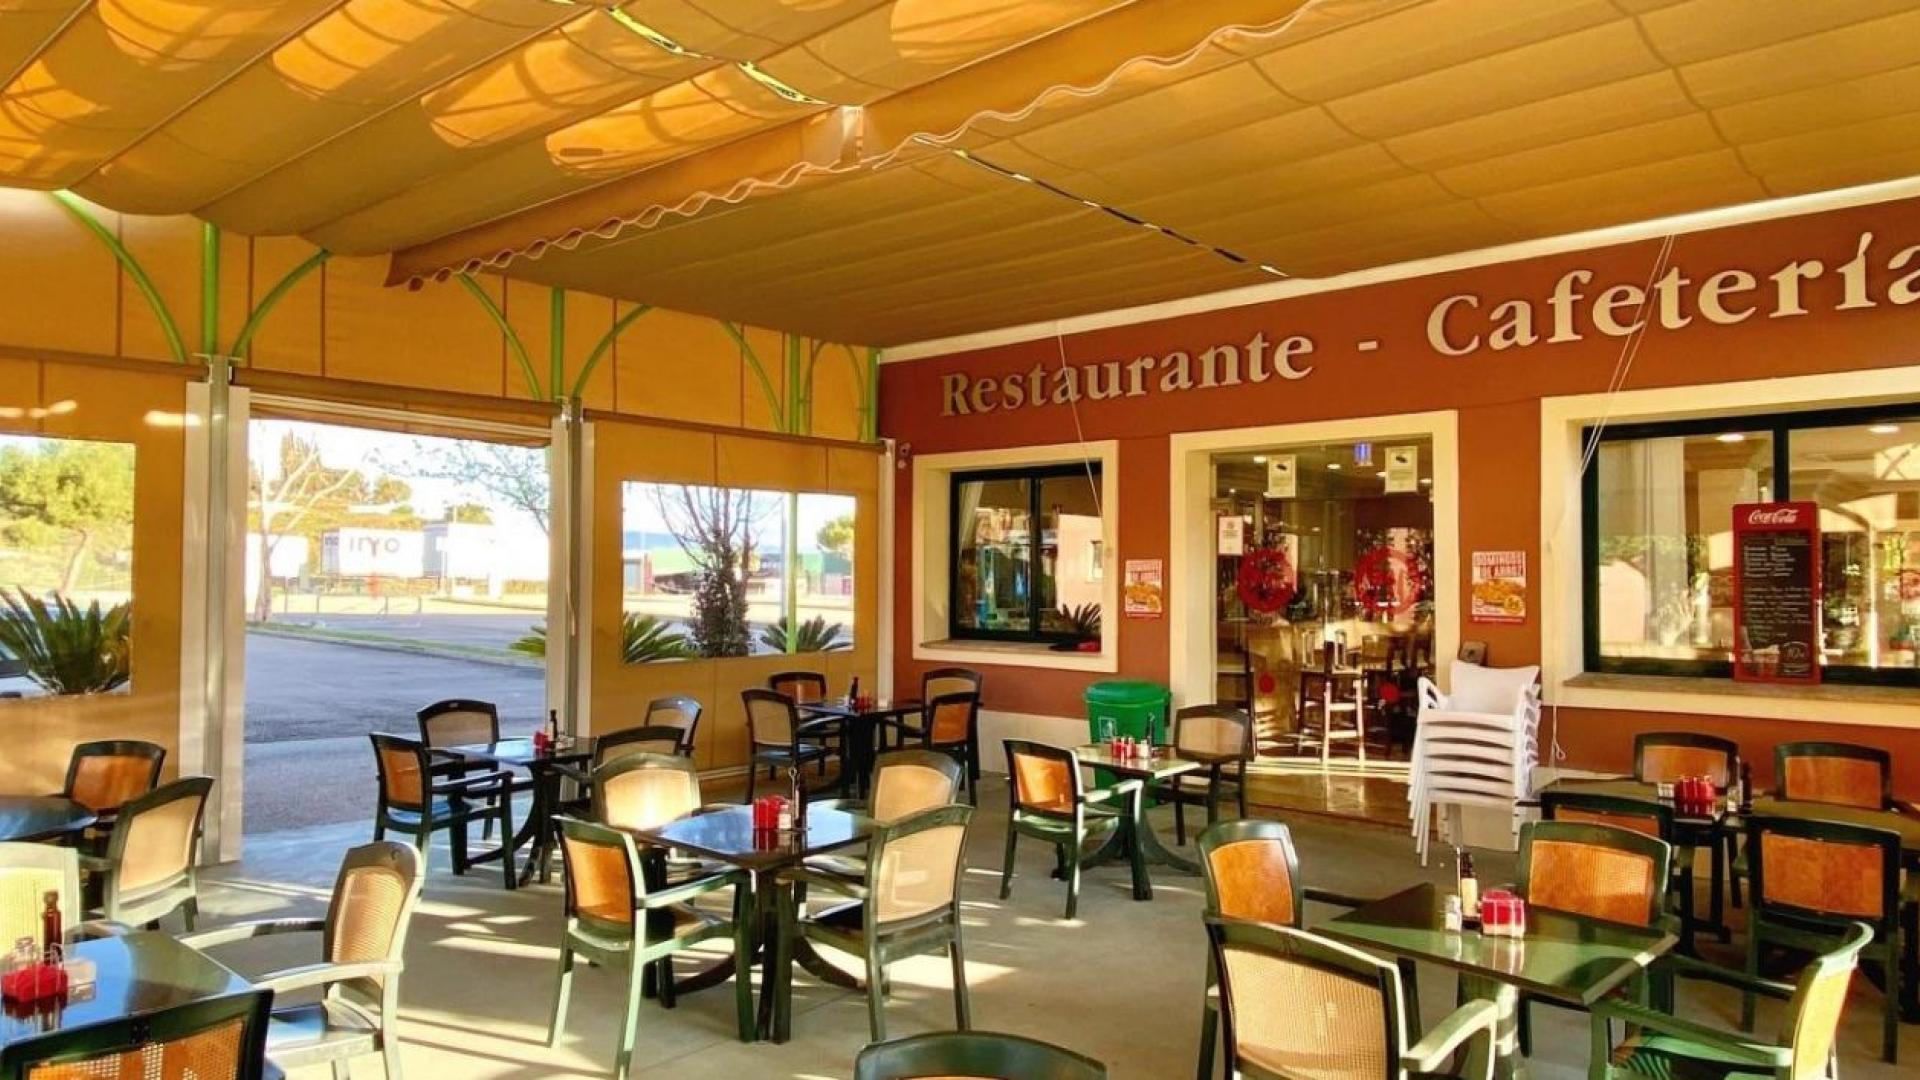 Restaurante Bar La Trocha